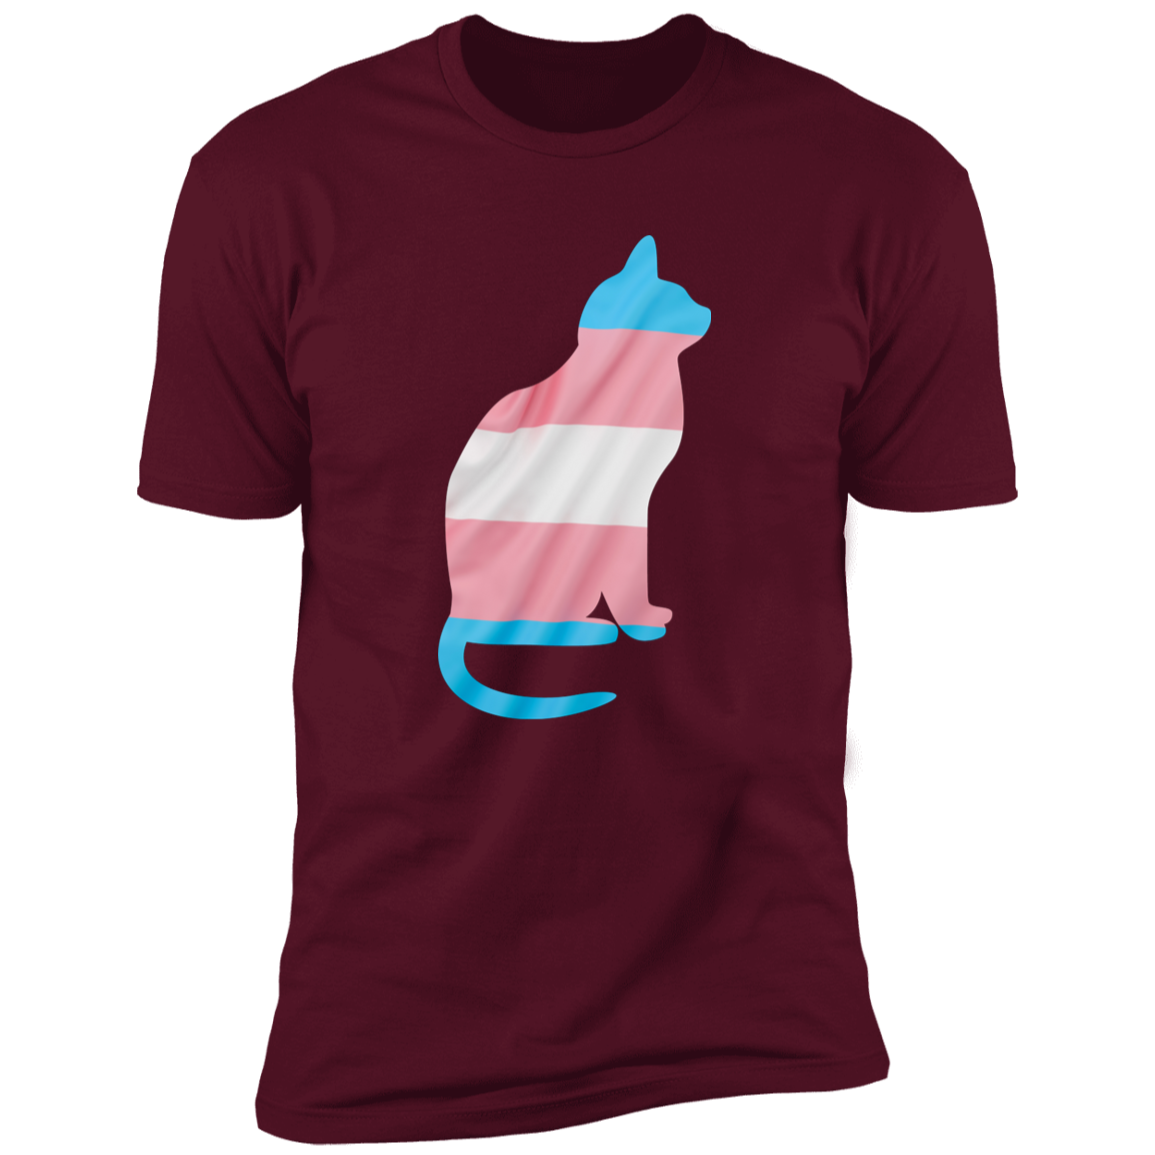 Trans Pride Cat Pride T-shirt, Trans Pride Cat Shirt for humans, in maroon